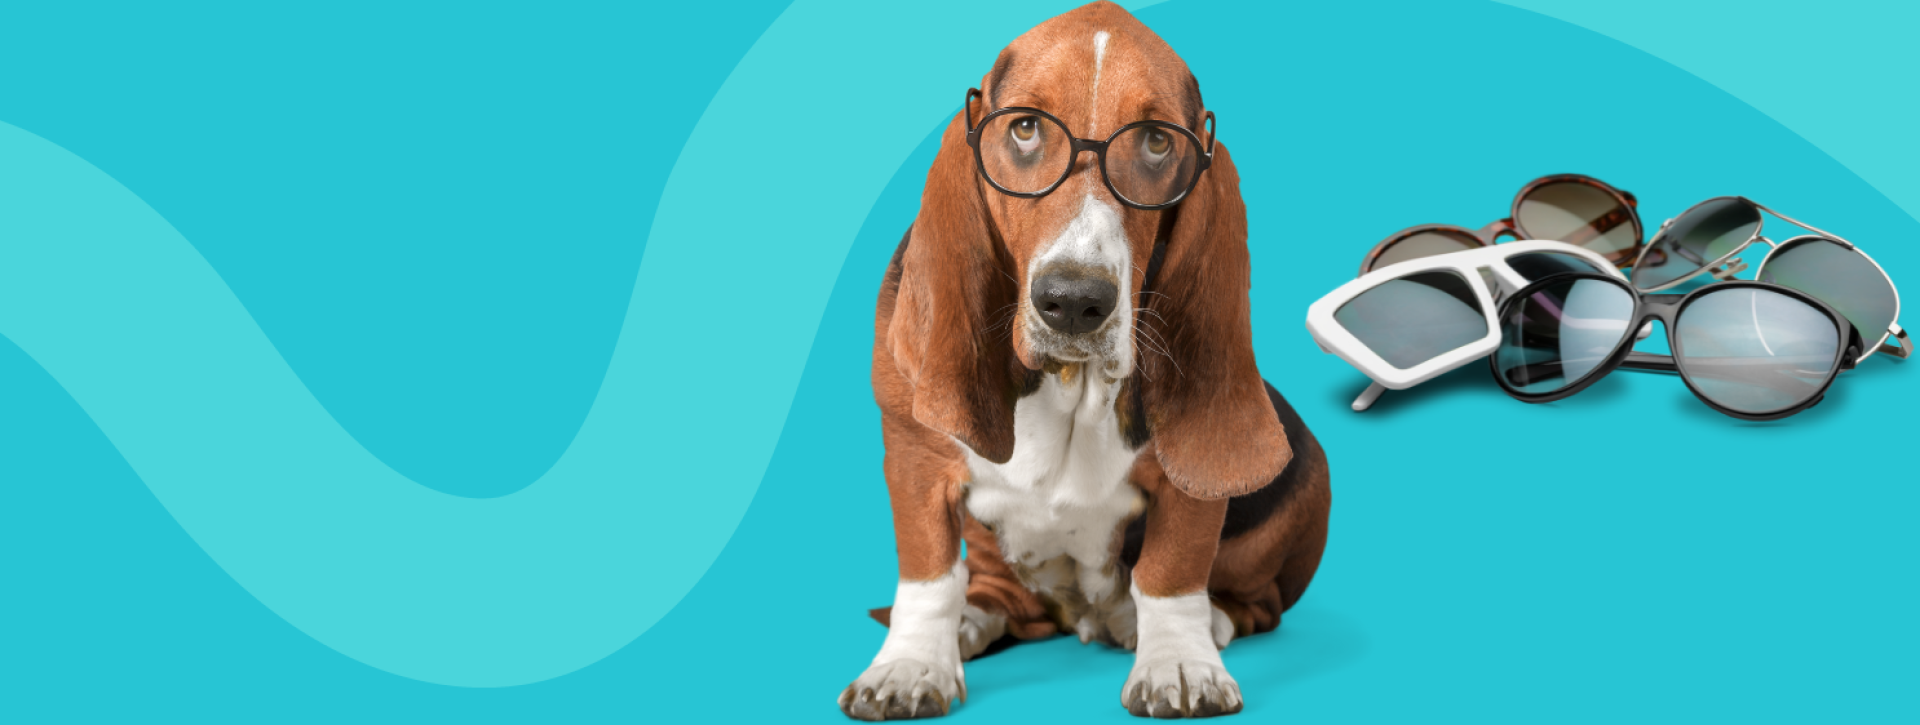 Basset hound wearing eye glasses